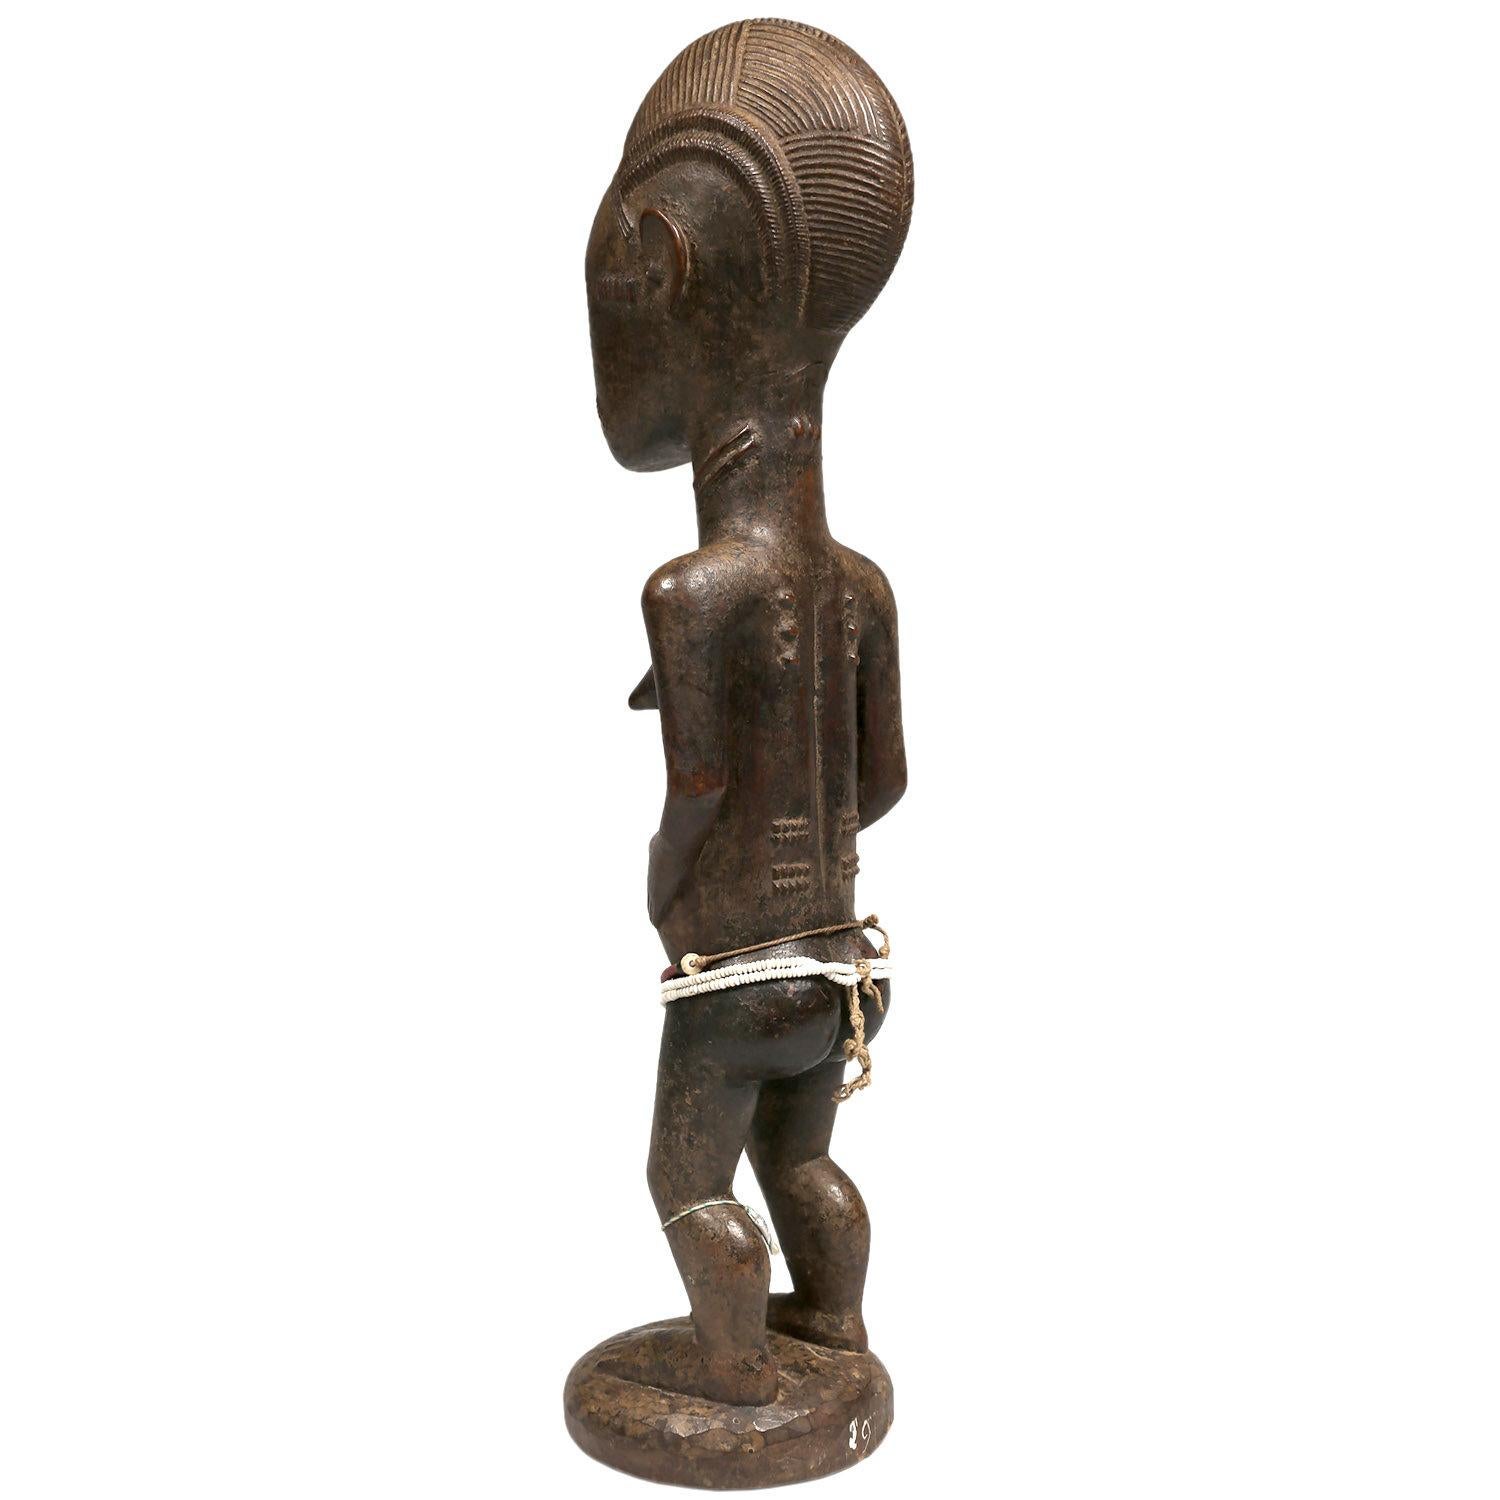 Other 1st Half 20th Century Female Baule Figure, Ivory Coast, Africa